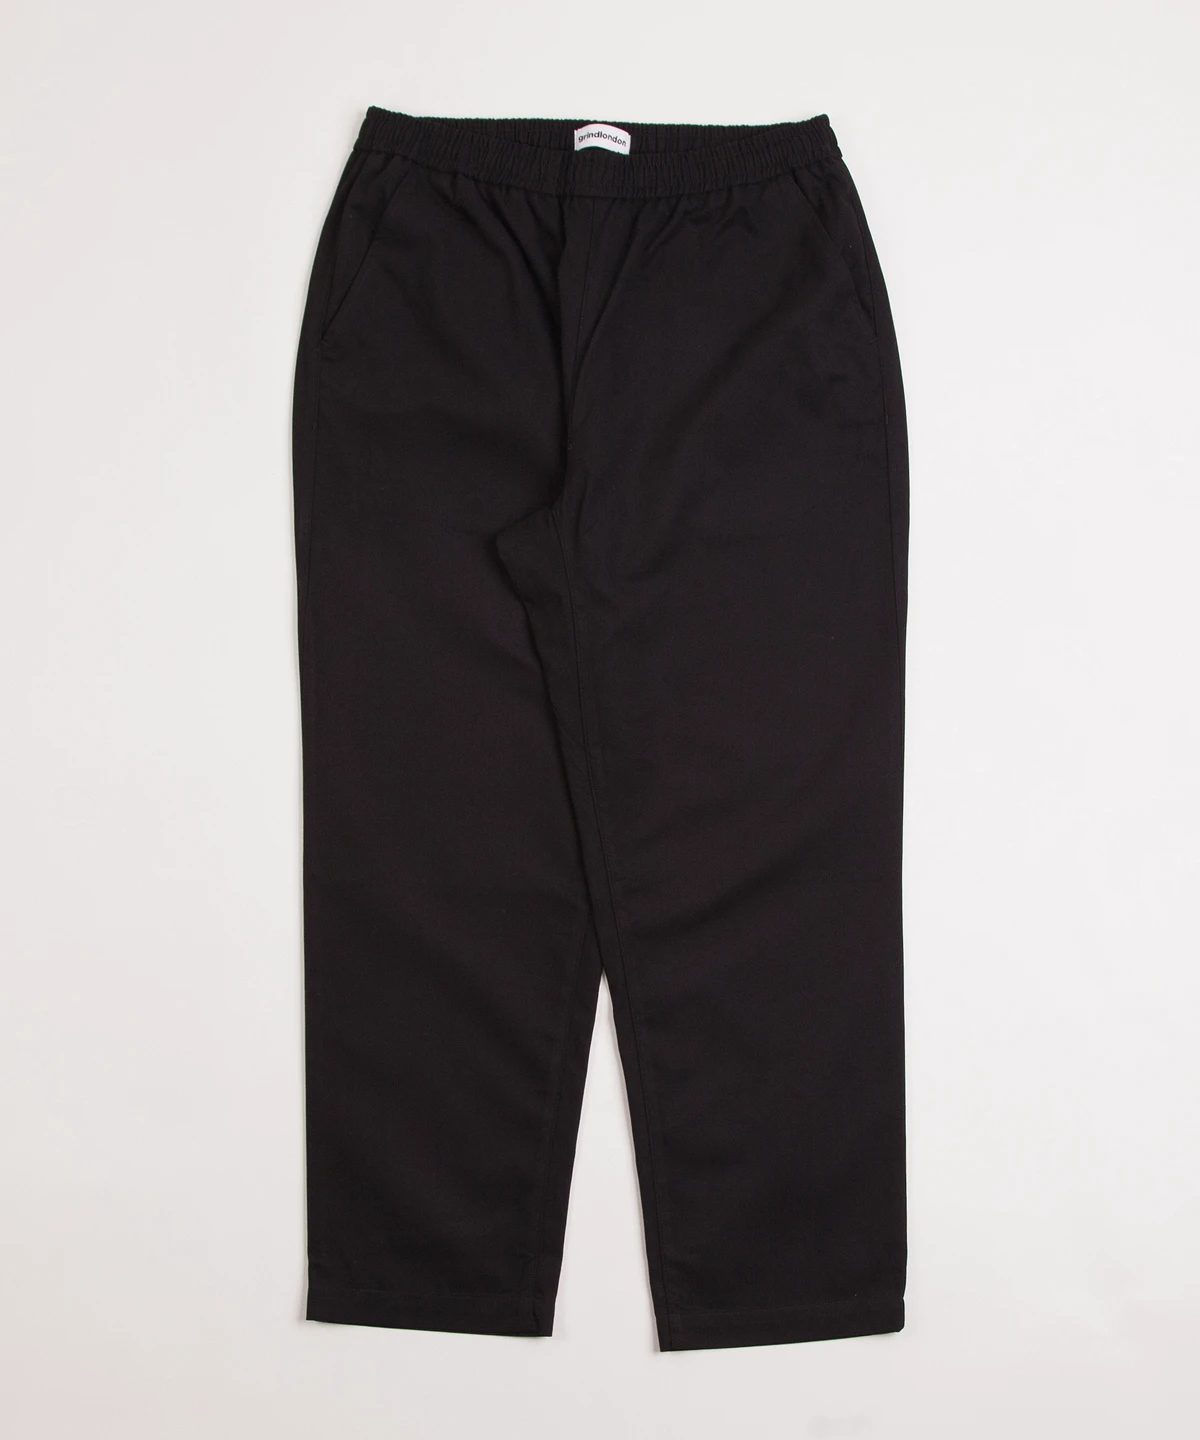 grindlondon 100% cotton relaxed elasticated waist trouser black